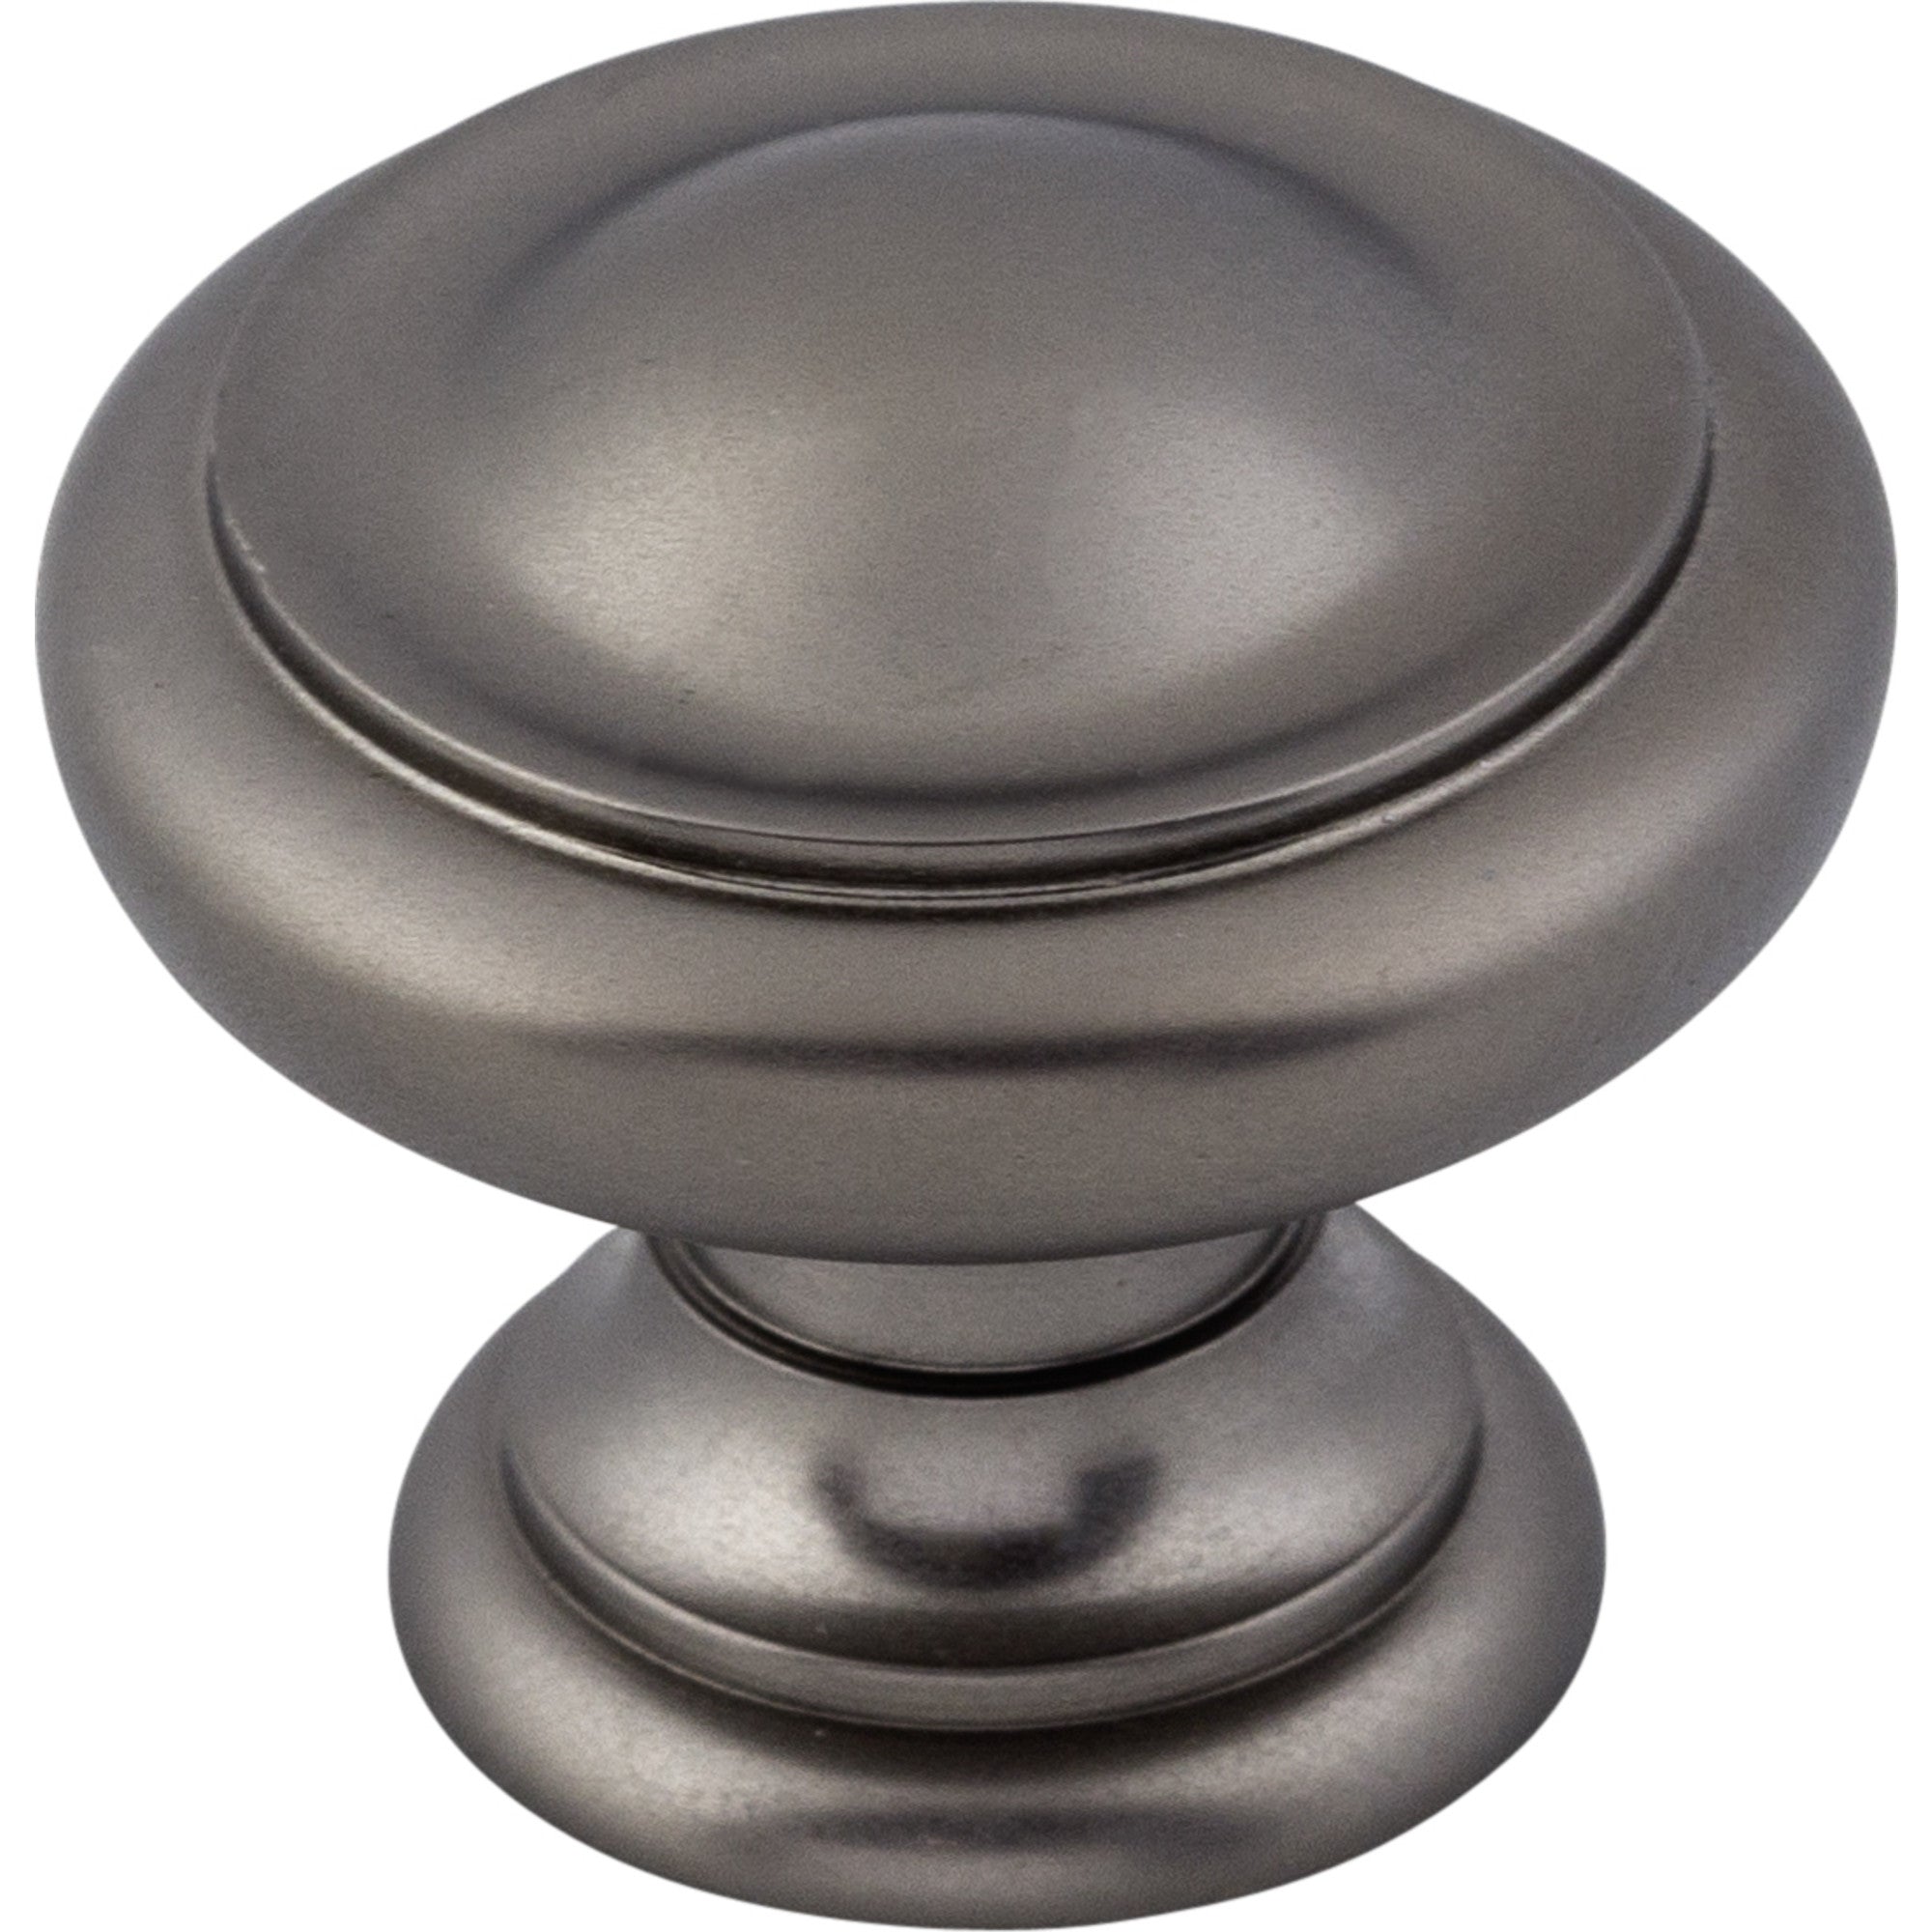 Top Knobs - Hardware - Dome Knob - Medium Bronze - Union Lighting Luminaires Décor